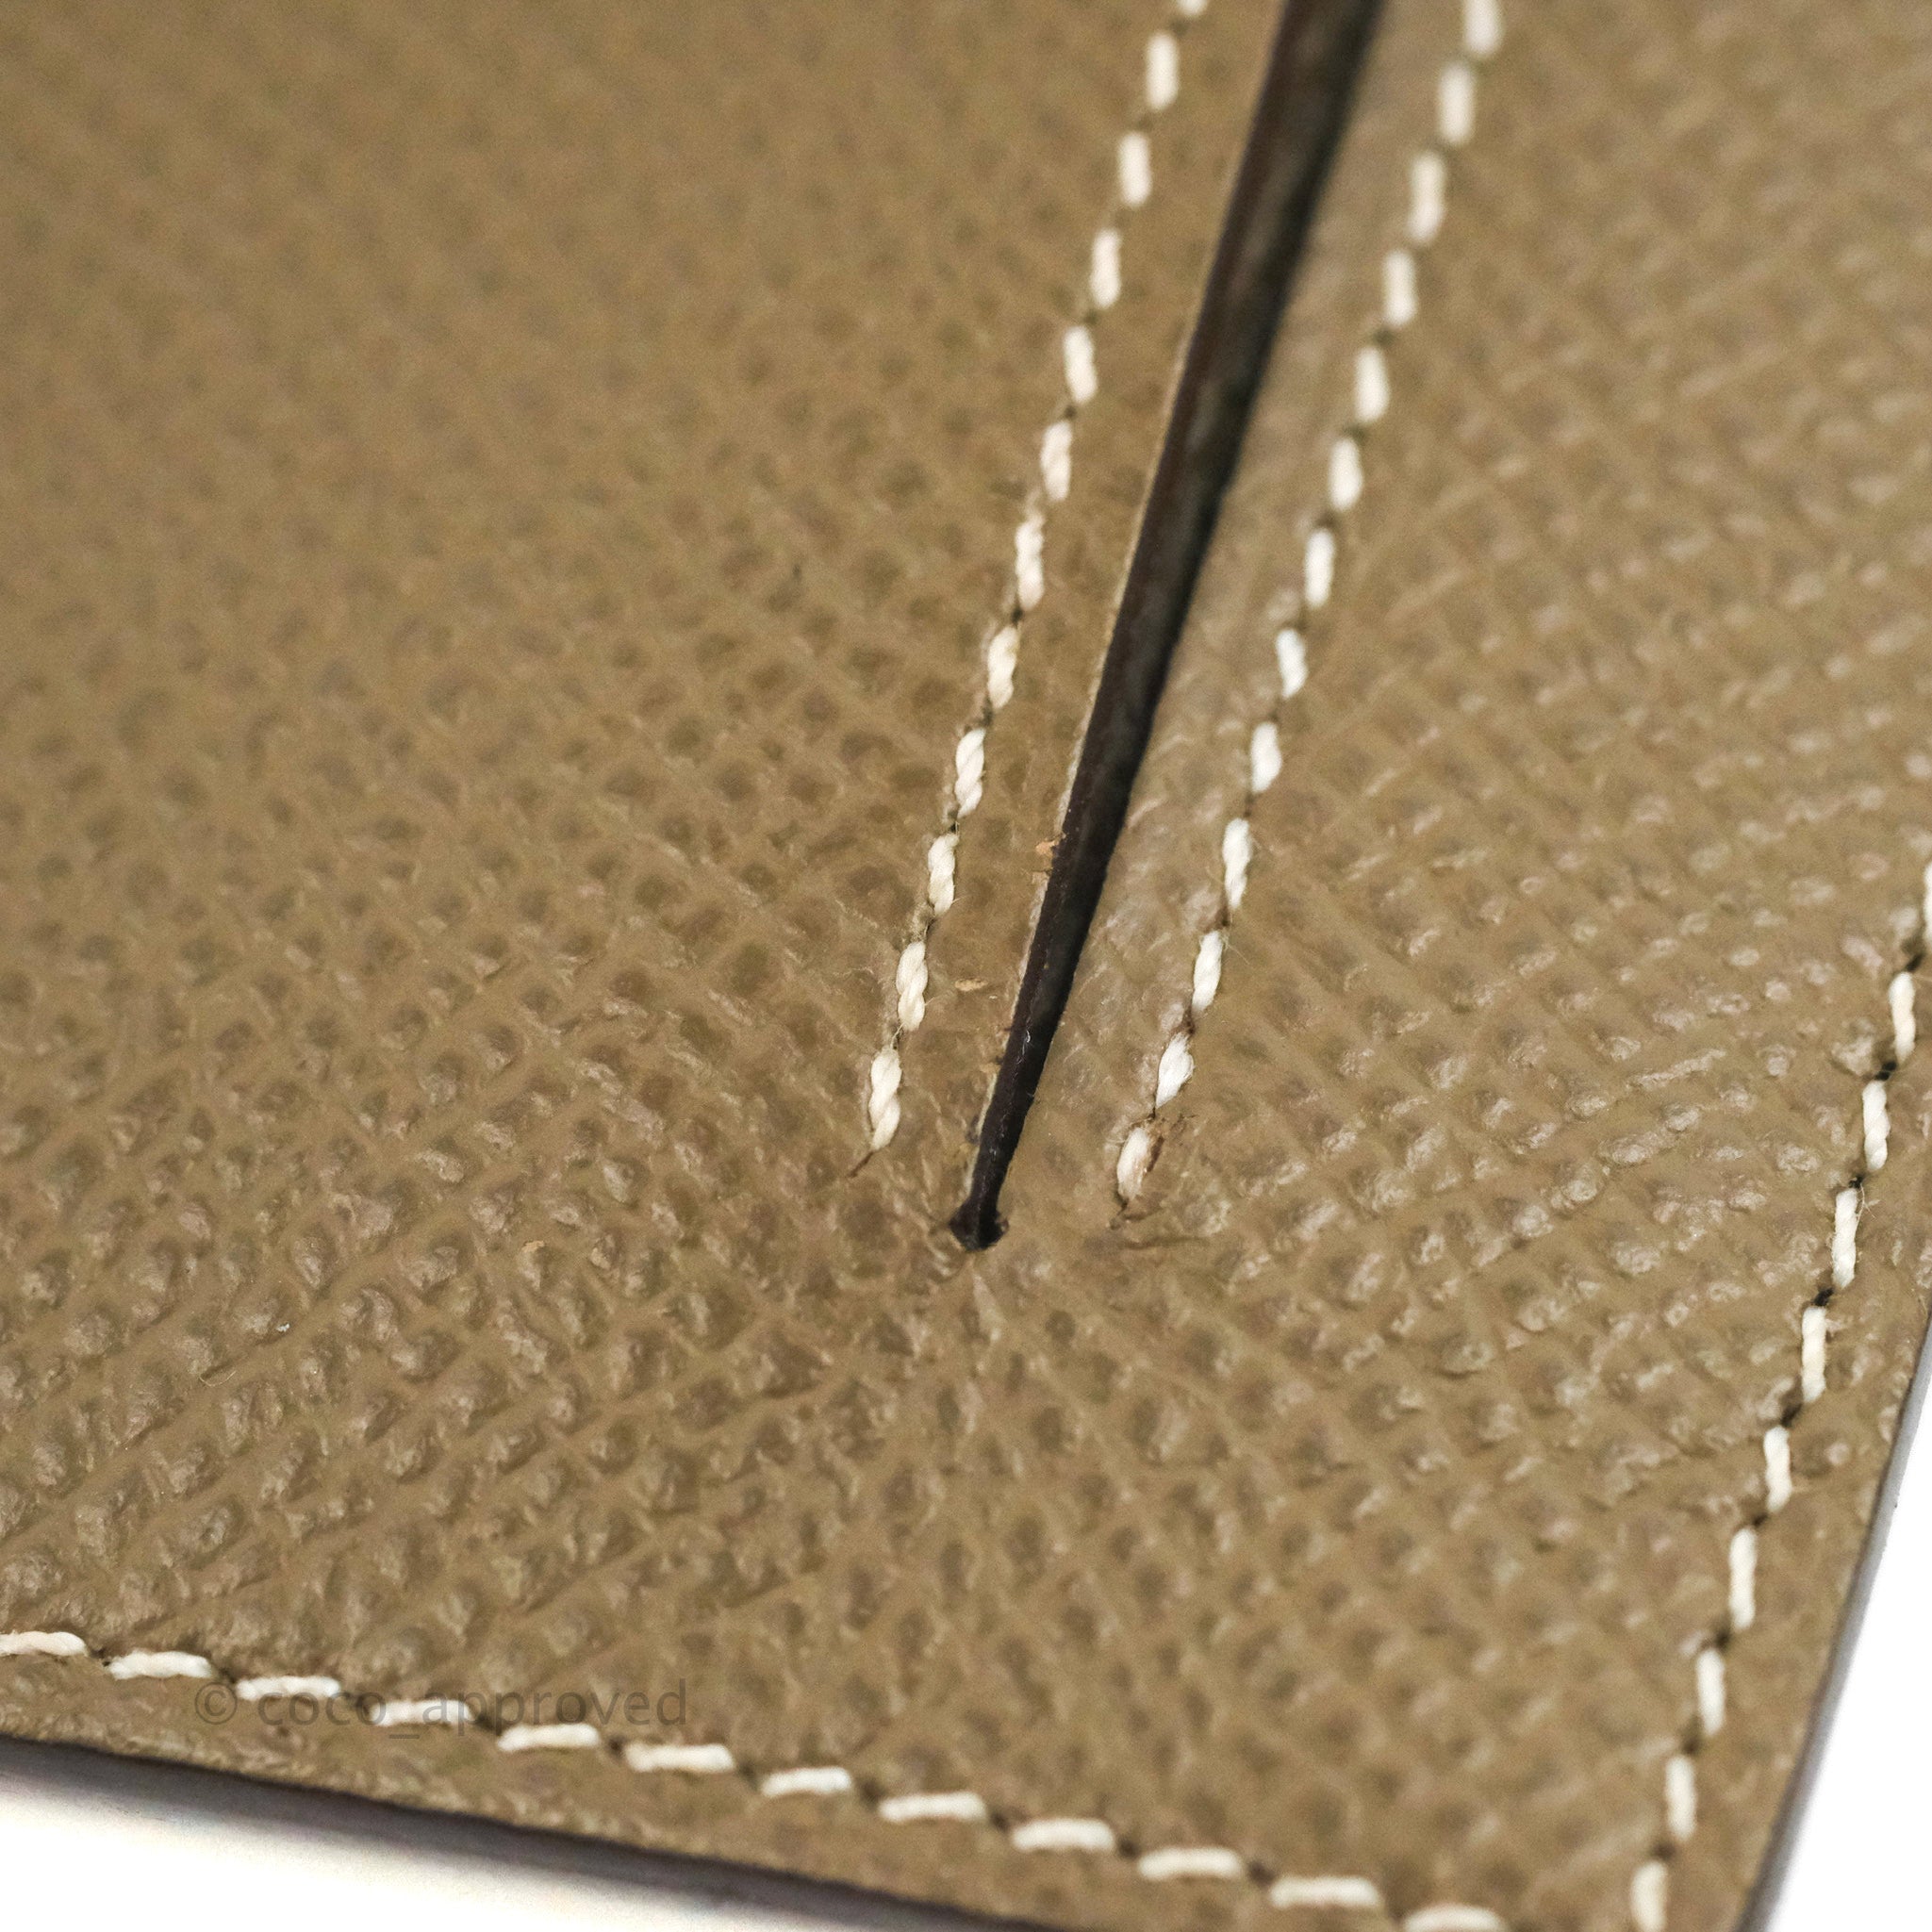 Hermès Kelly Pocket Compact Wallet, Epsom, Feu GHW - Laulay Luxury